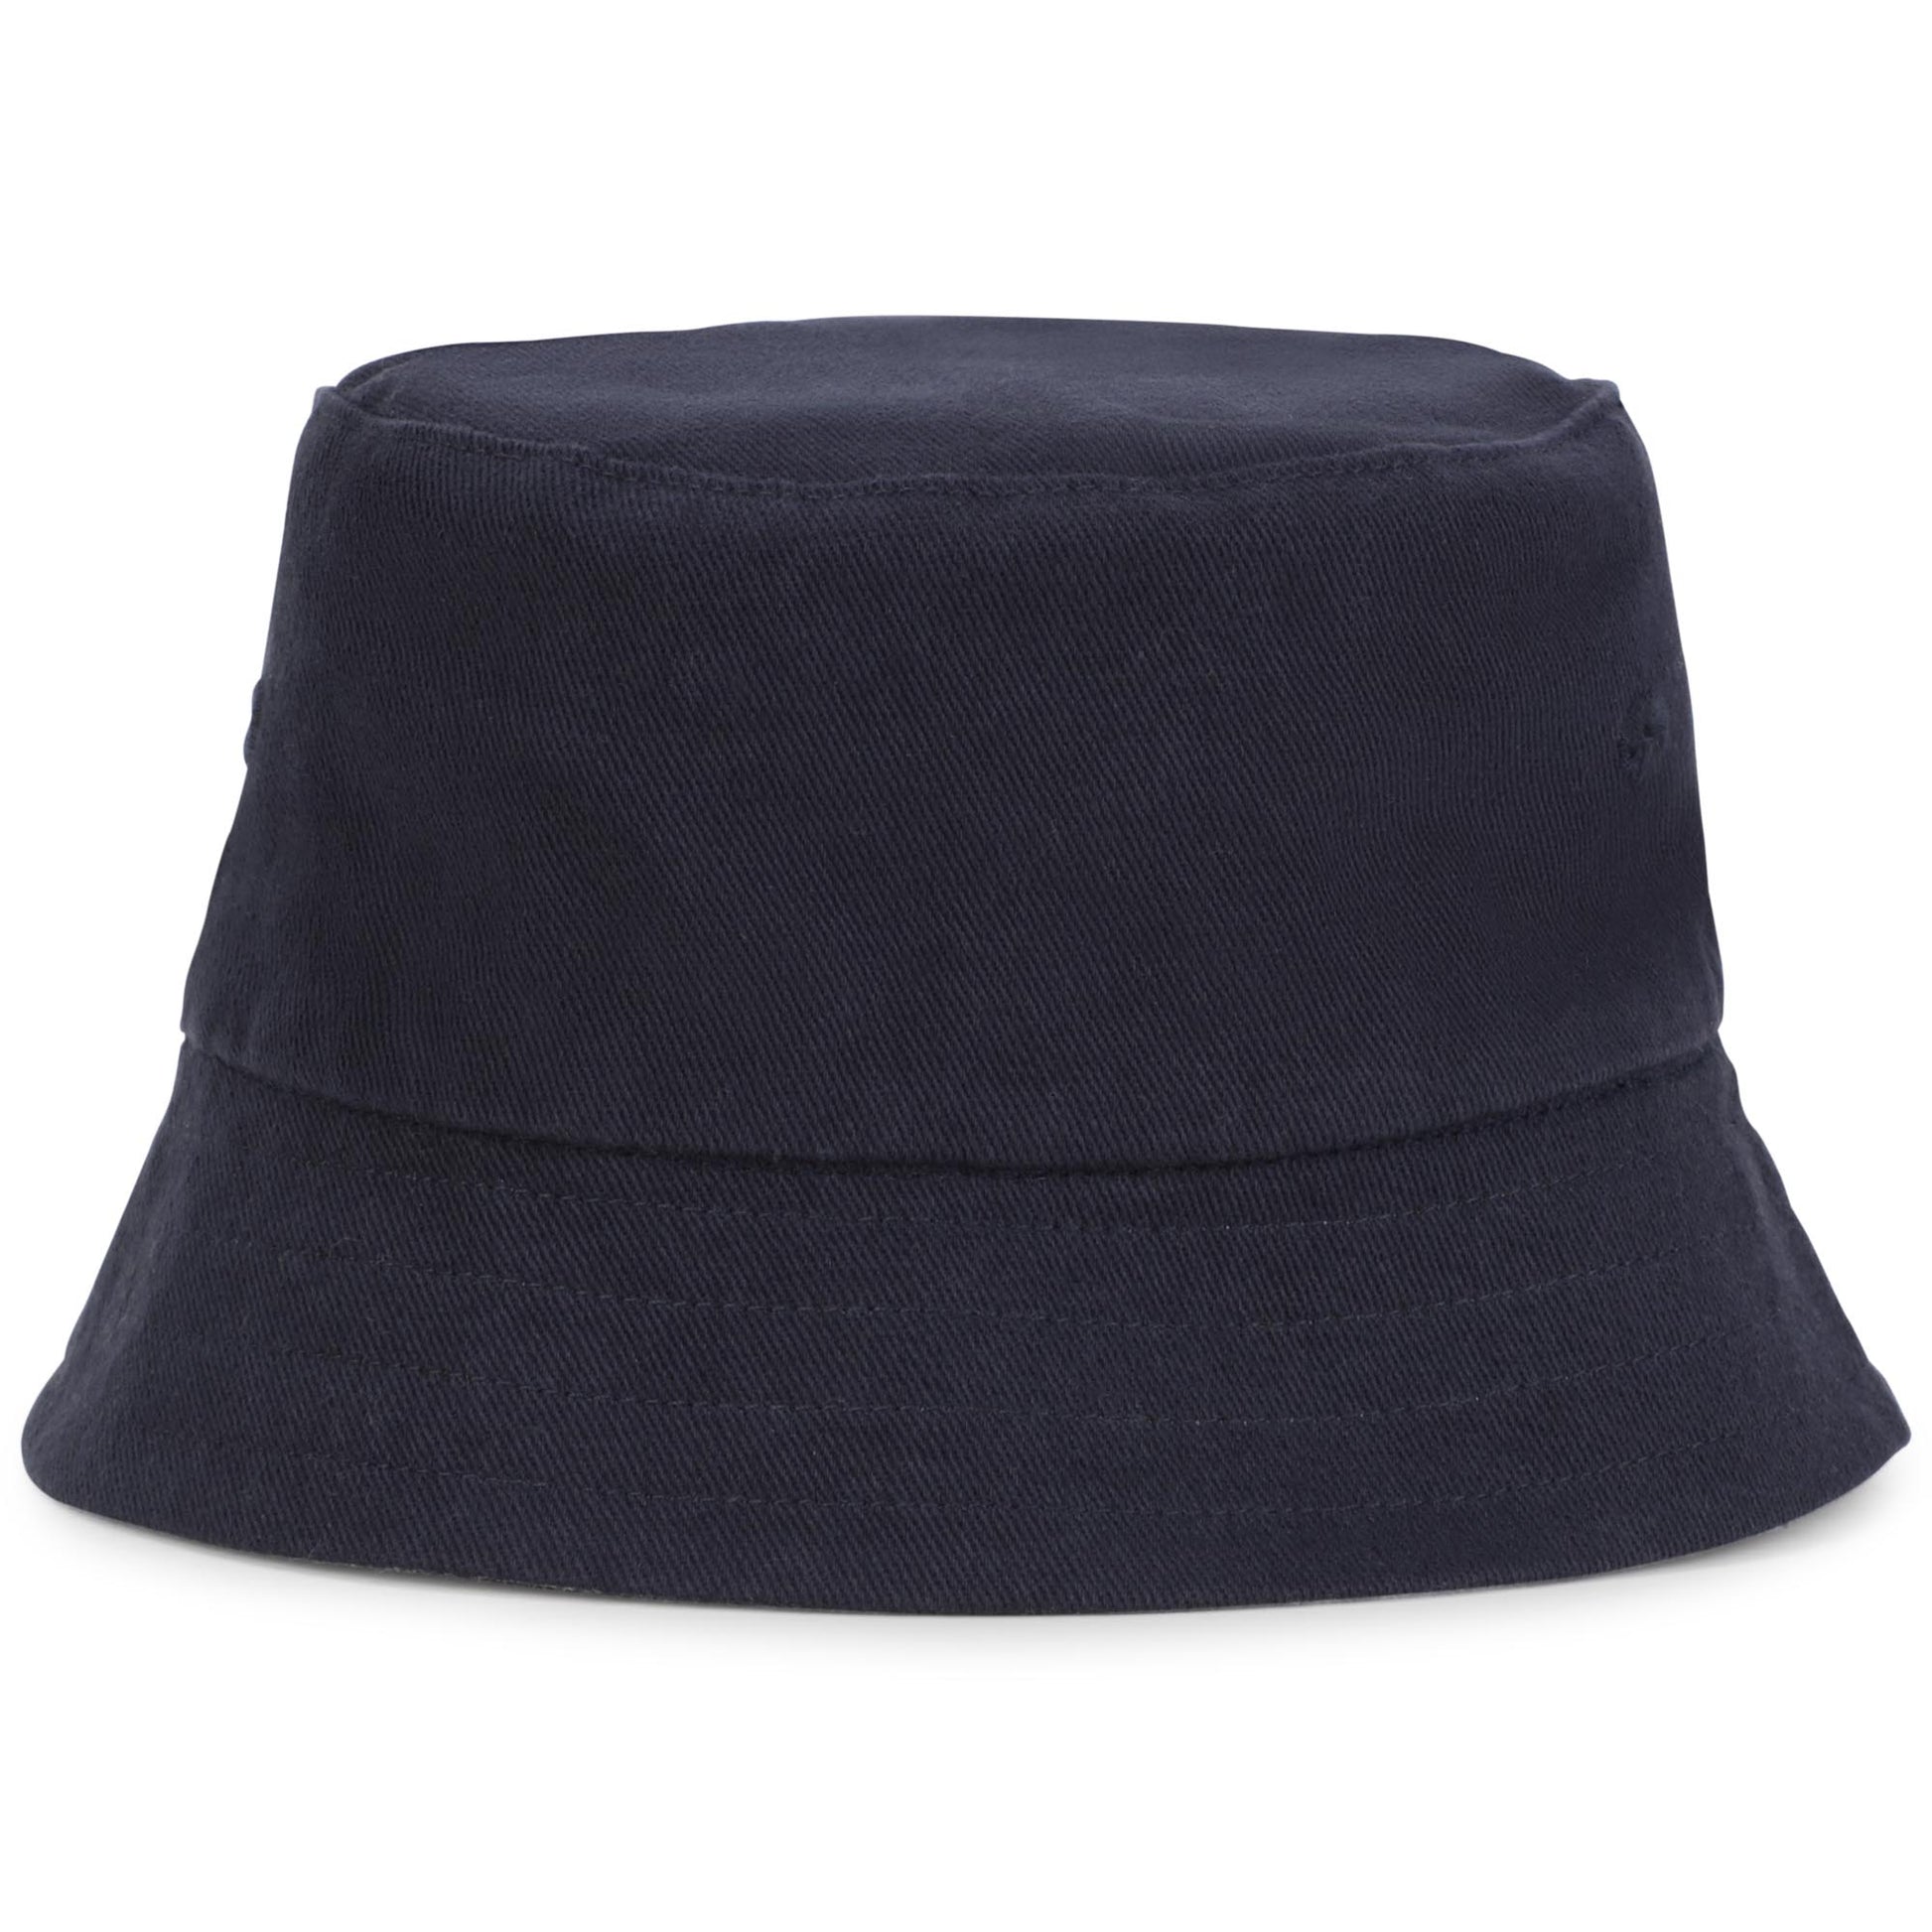 Boss, Hats, Boss - Reversible Bucket Hat, Navy